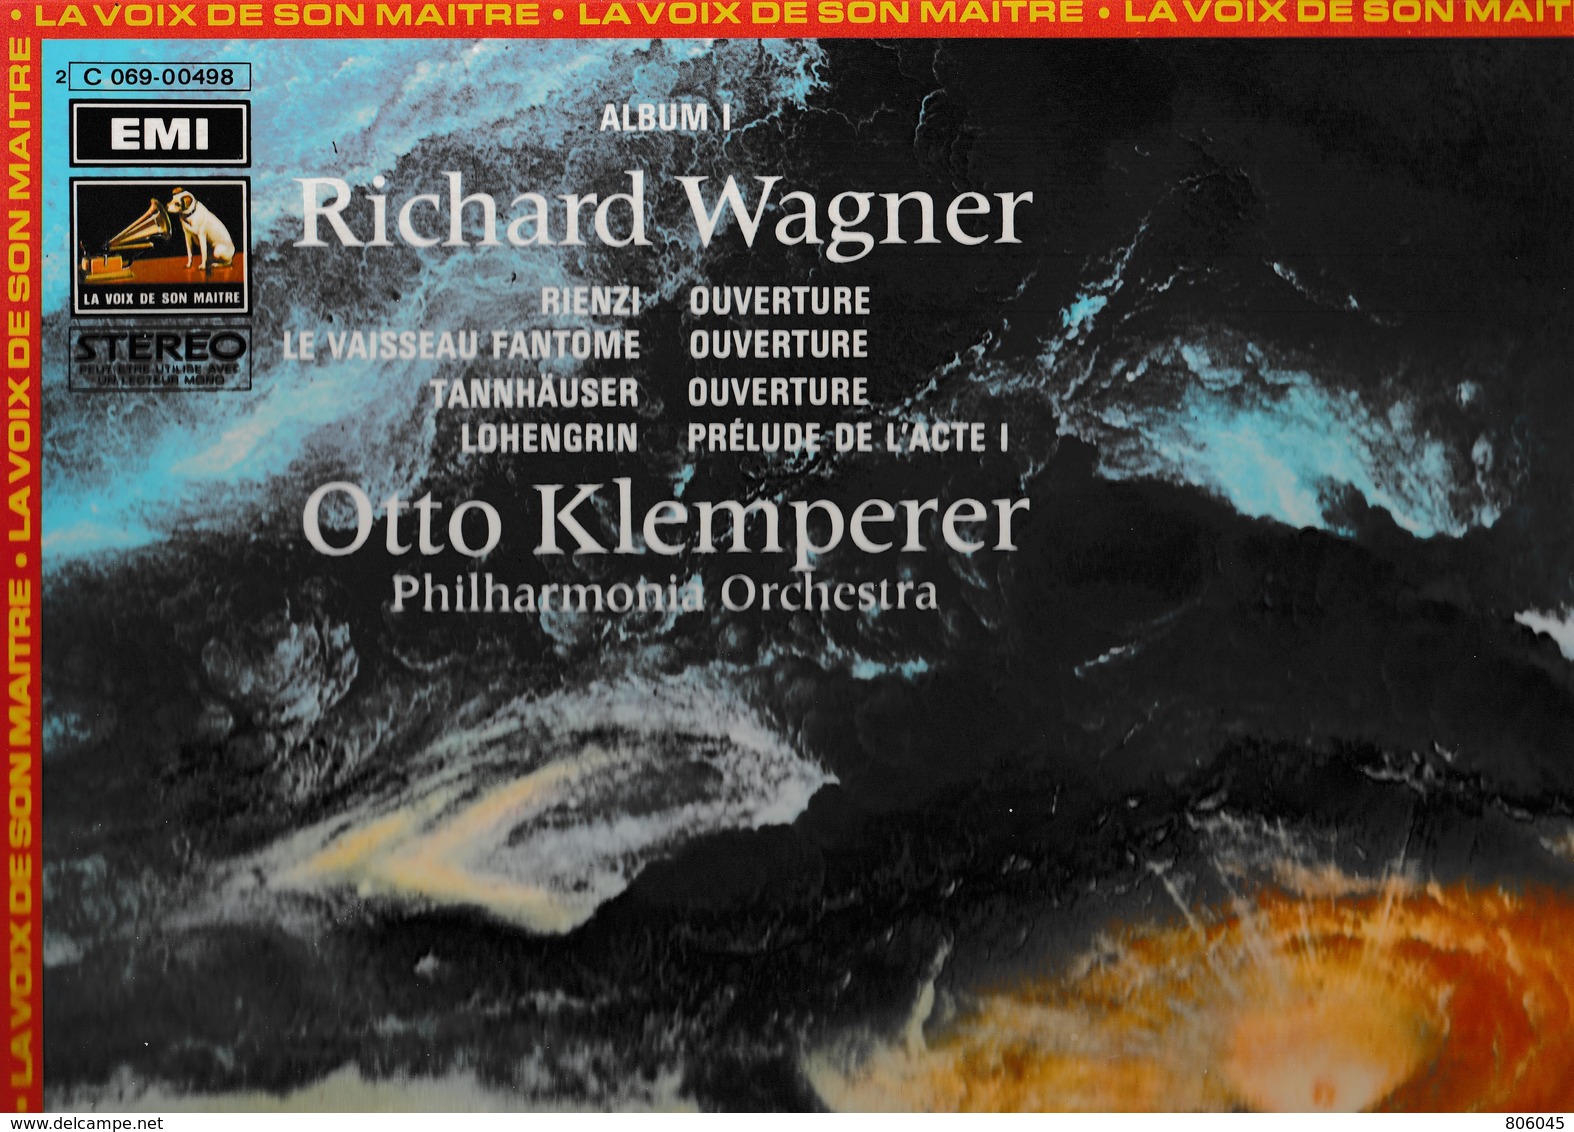 Richard Wagner / Otto Klmperer - Classique